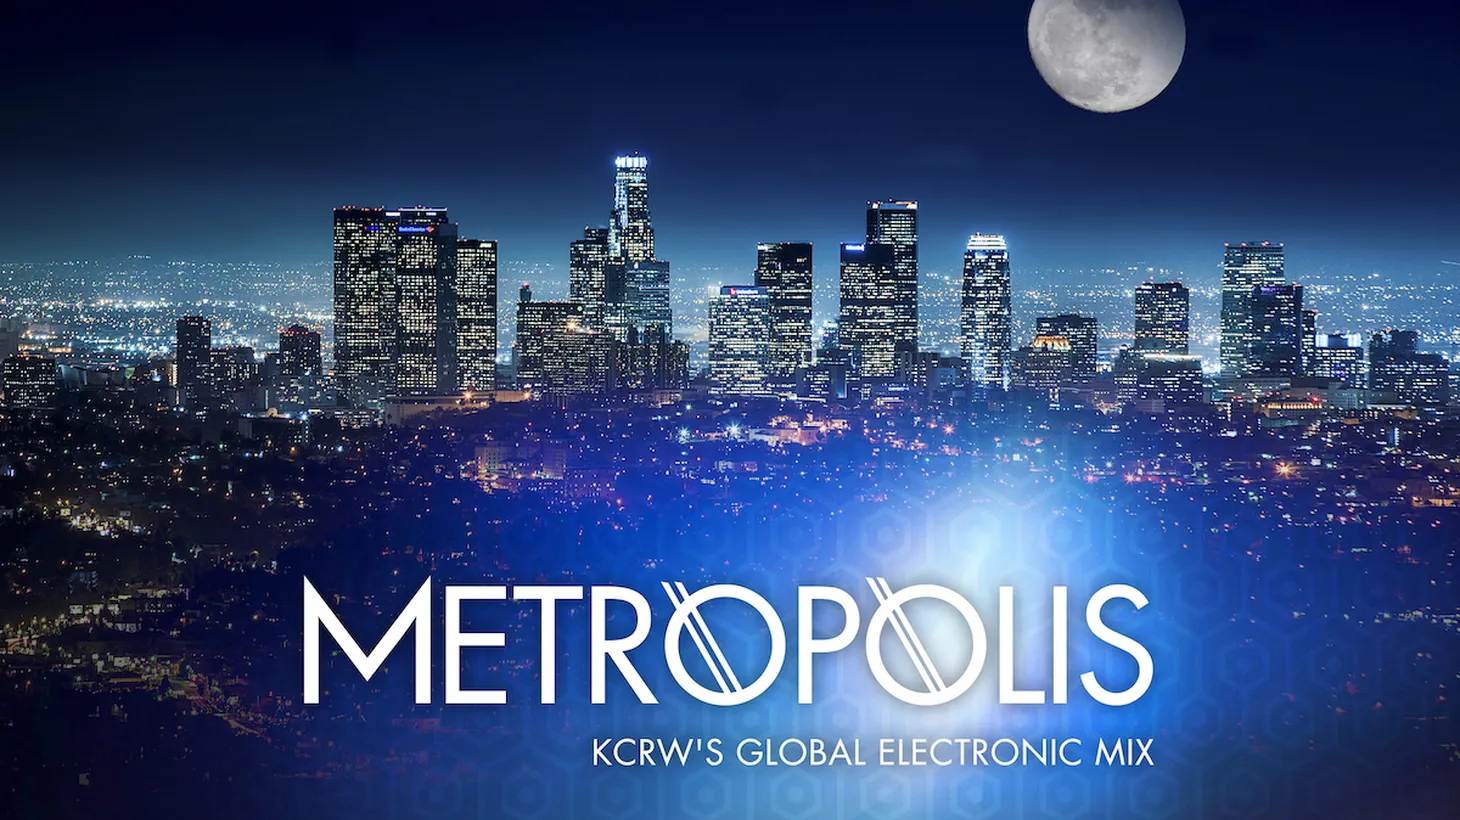 Metropolis playlist, July 9, 2022.